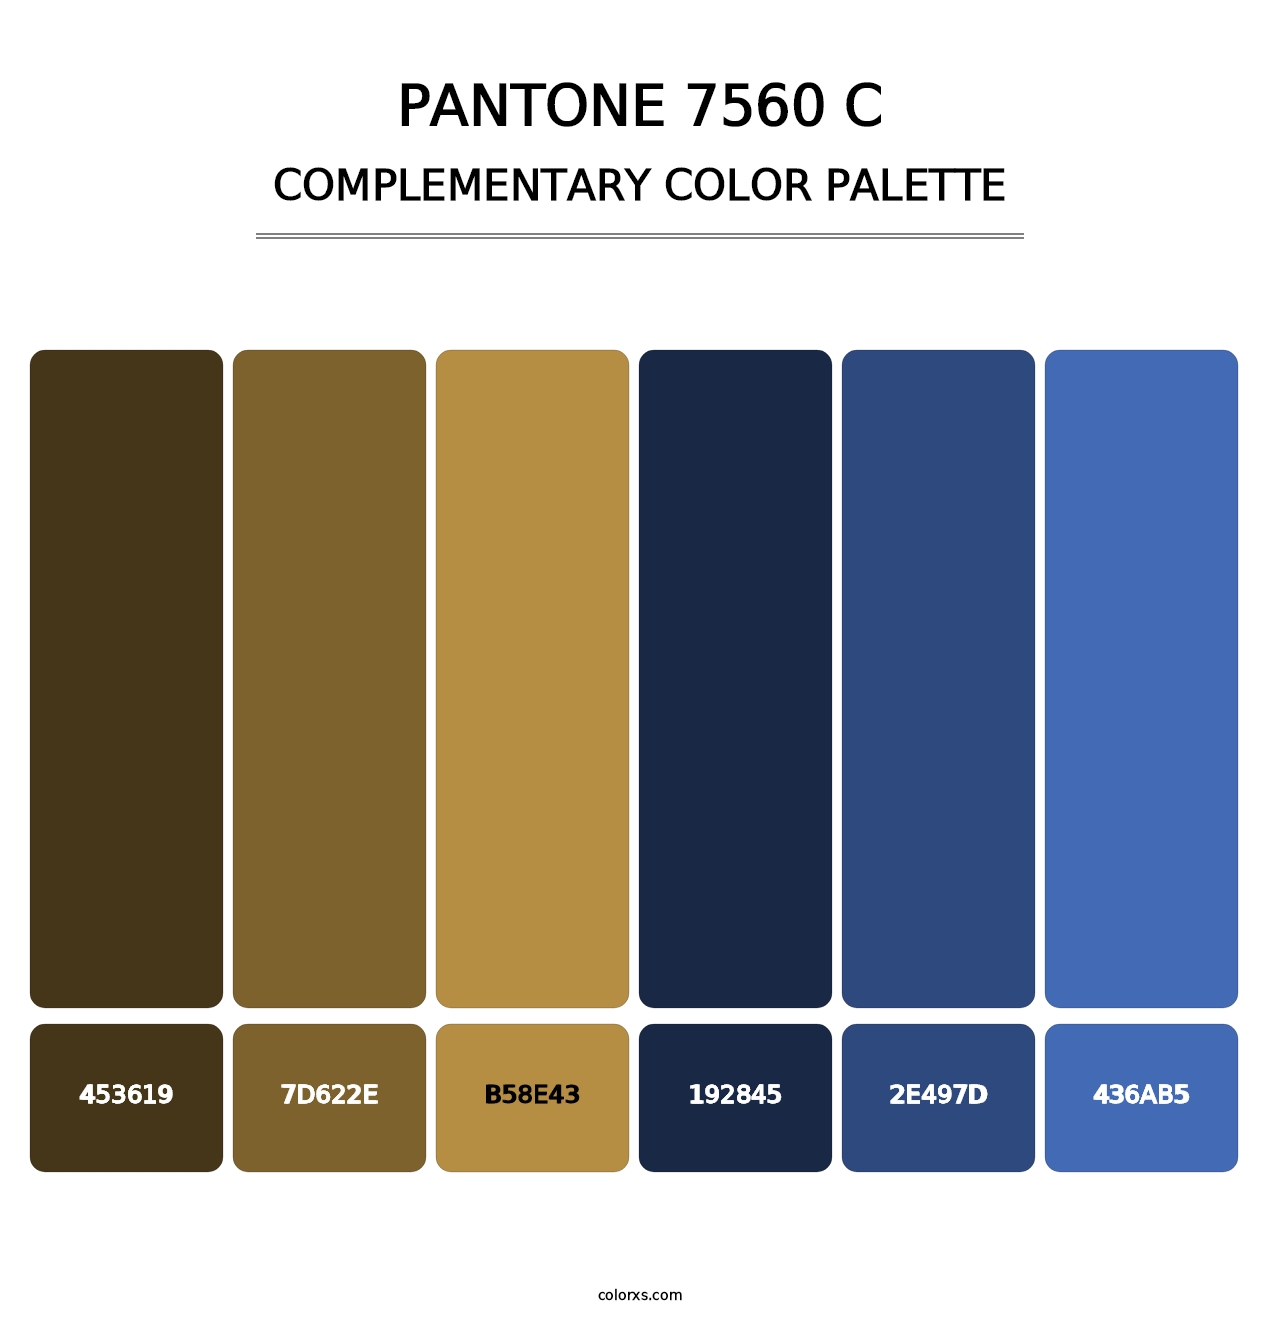 PANTONE 7560 C - Complementary Color Palette